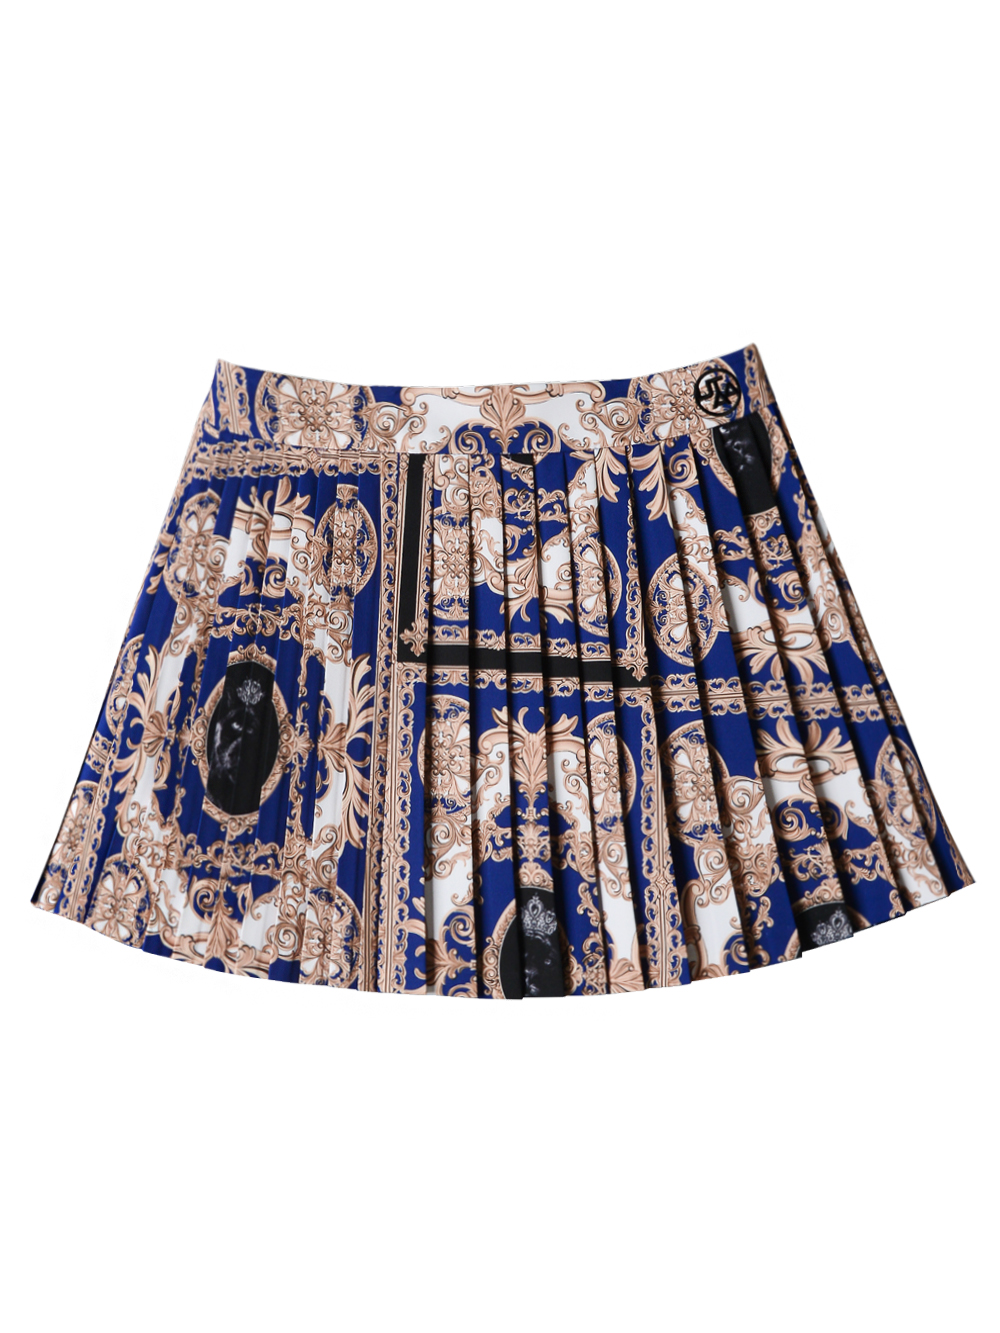 UTAA Canyon Buckingham Skirt : Blue (UC3SKF592BL)